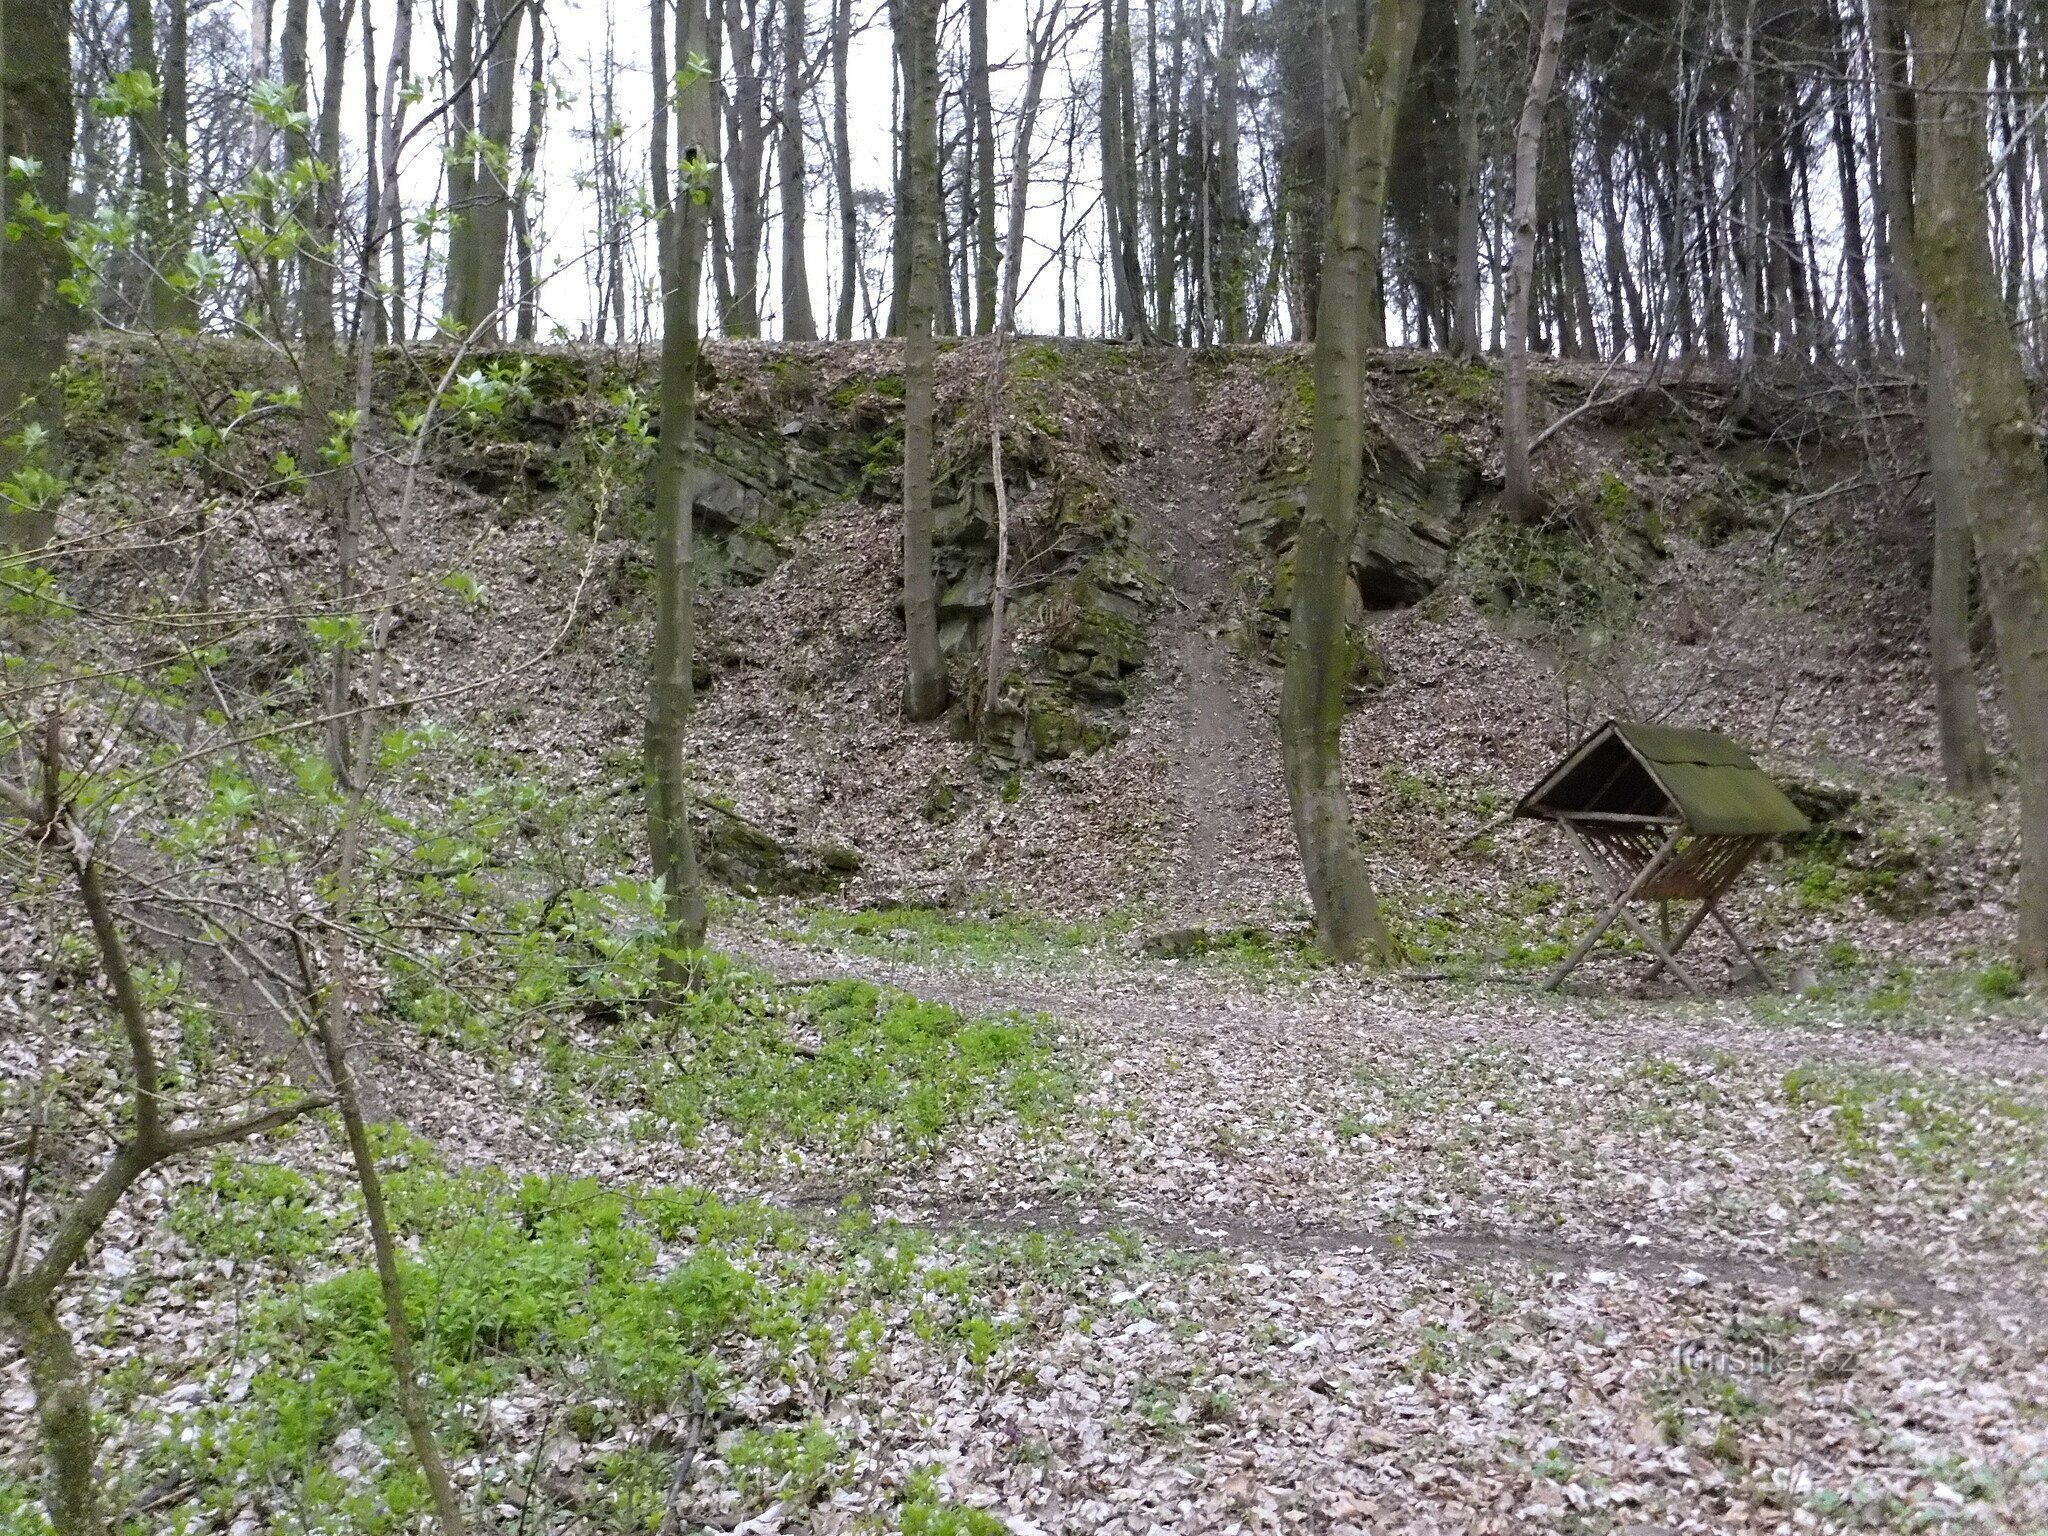 Cave segrete vicino a Jilešovice, seconda parte.